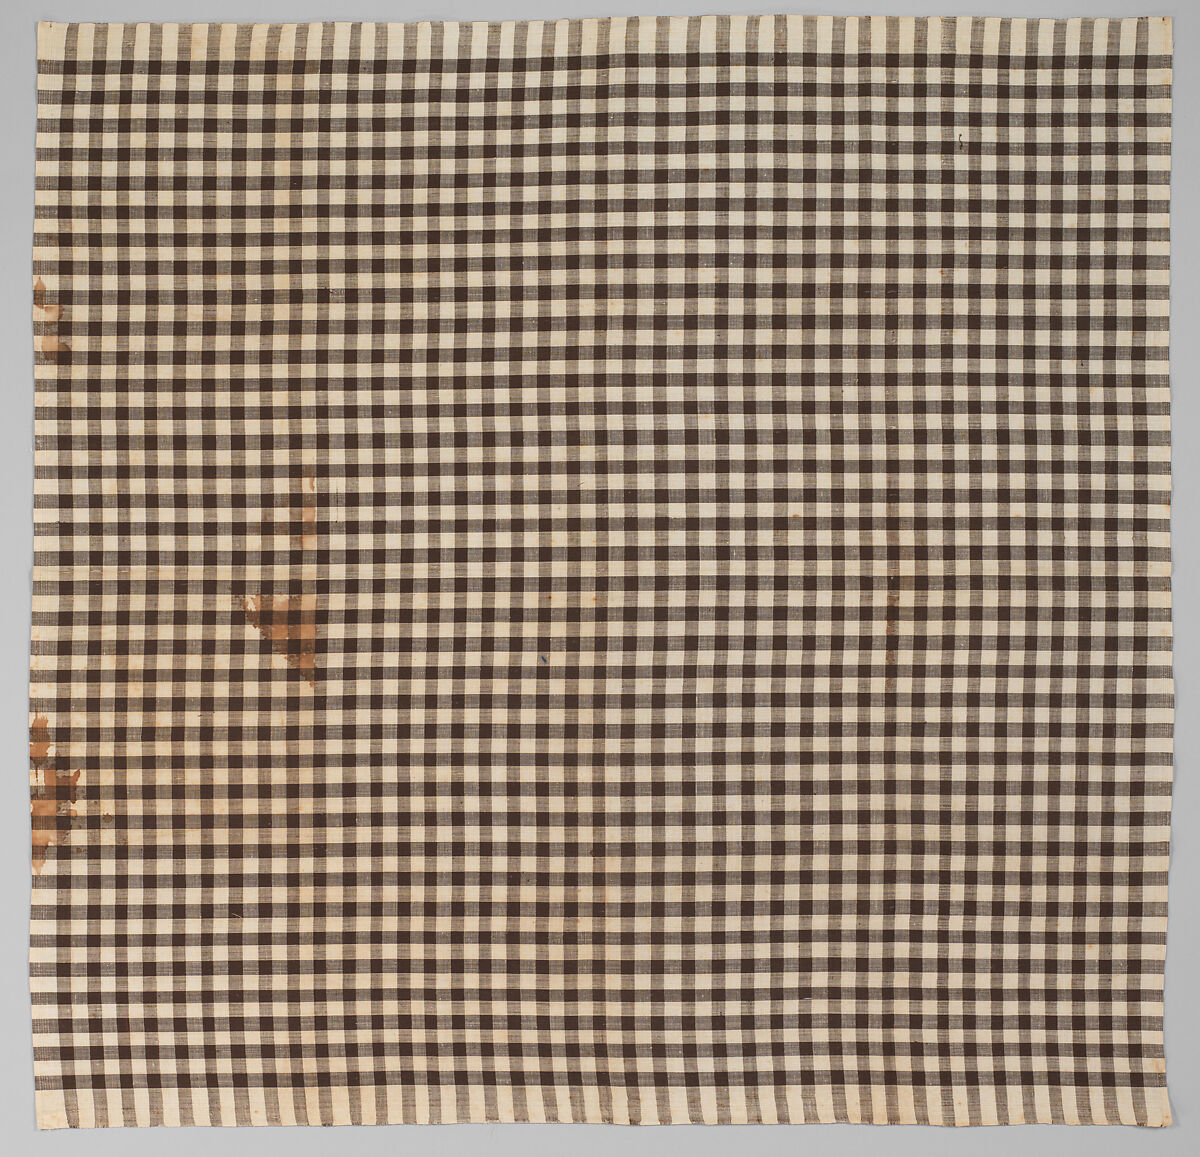 Handkerchief, Cotton, possibly British 